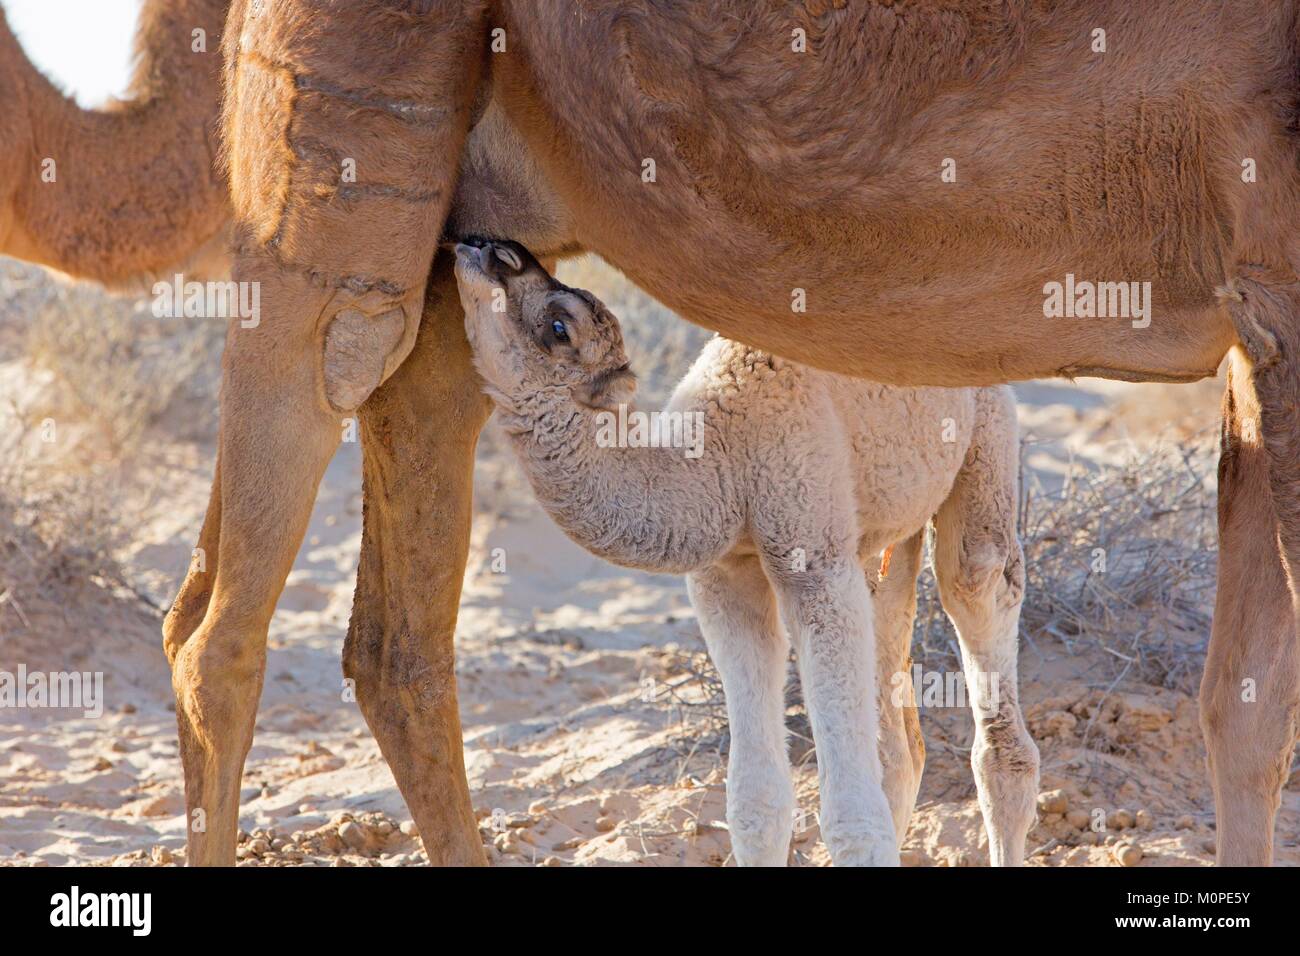 Tunisia,Douz,Sahara,camel,giovane dromedario Foto Stock